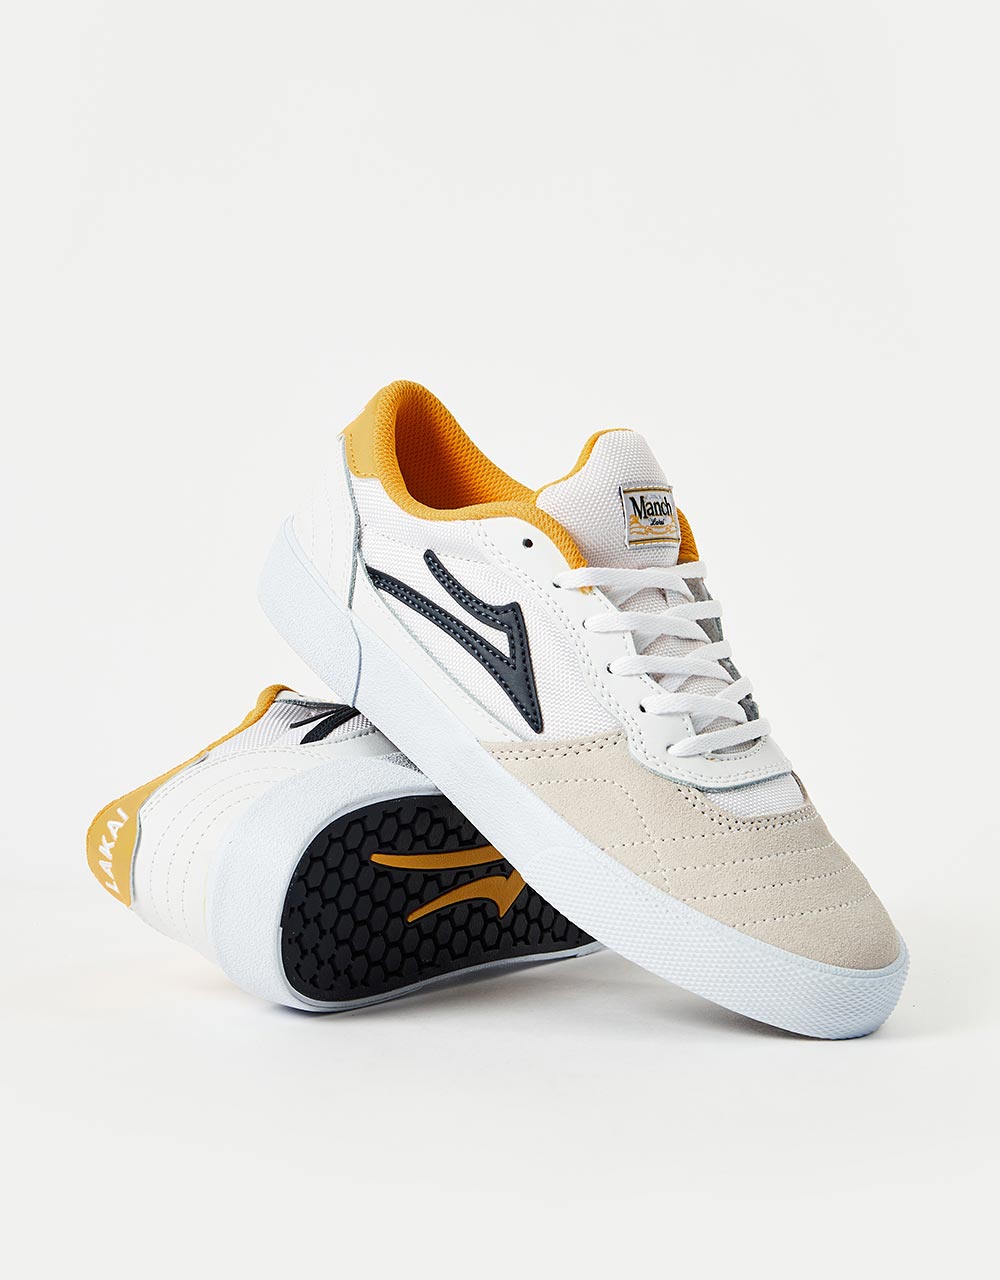 Lakai Cambridge Skate Shoes - White/Navy Suede